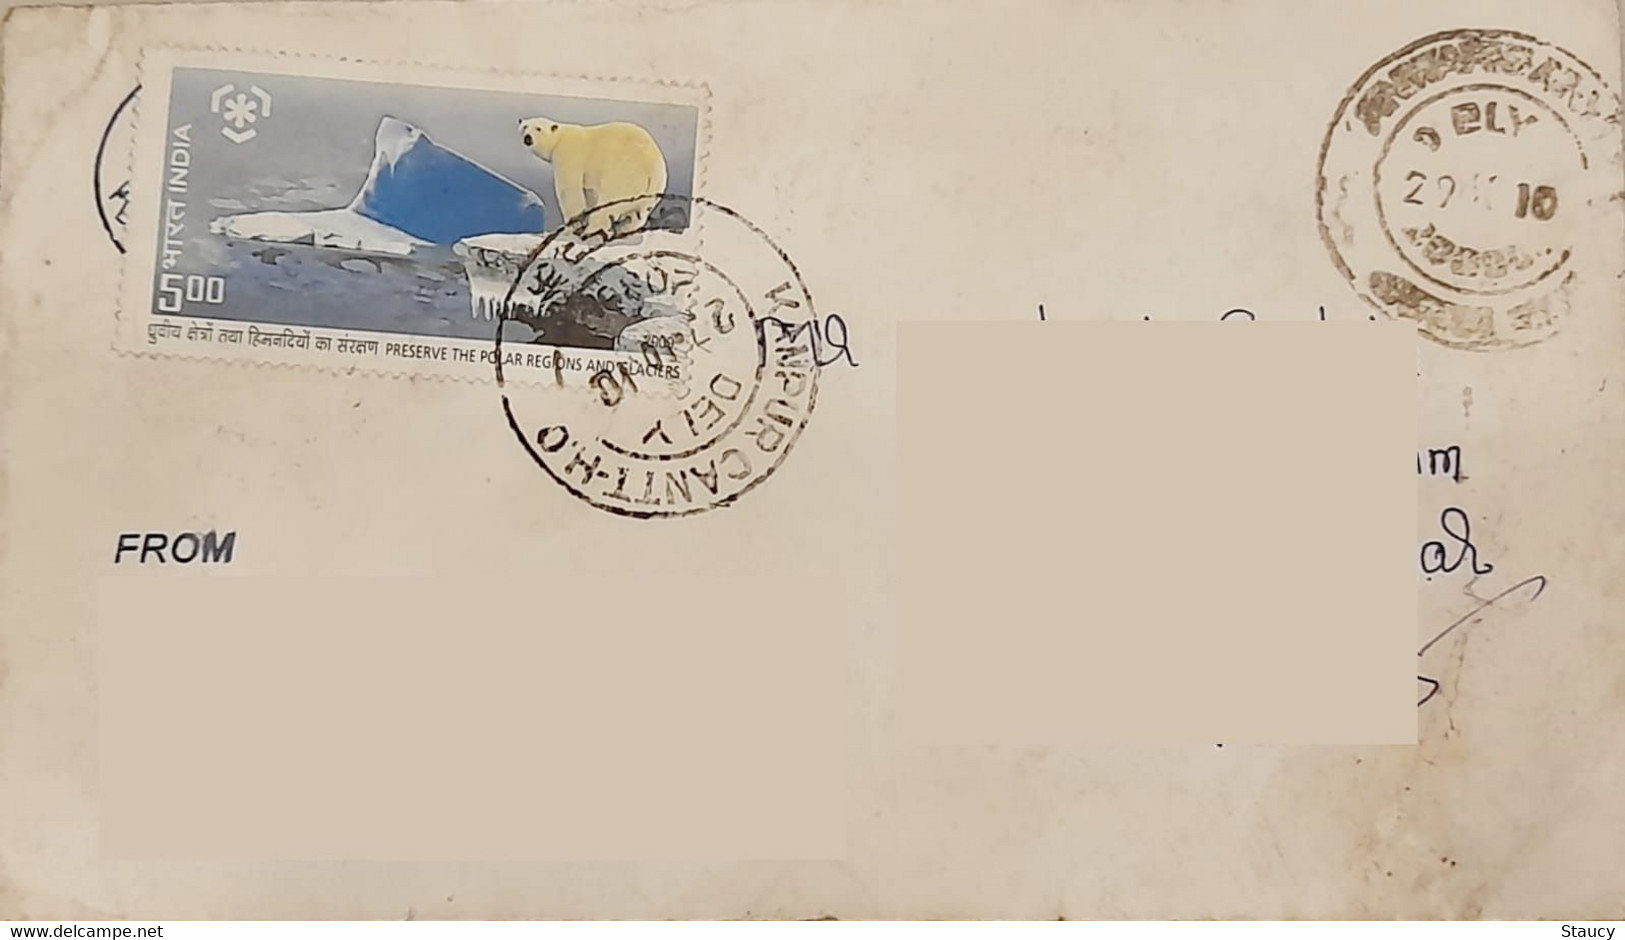 INDIA 2010 Preserve Polar Region & Glaciers Stamps Franked On Postal Cover As Per Scan - Behoud Van De Poolgebieden En Gletsjers